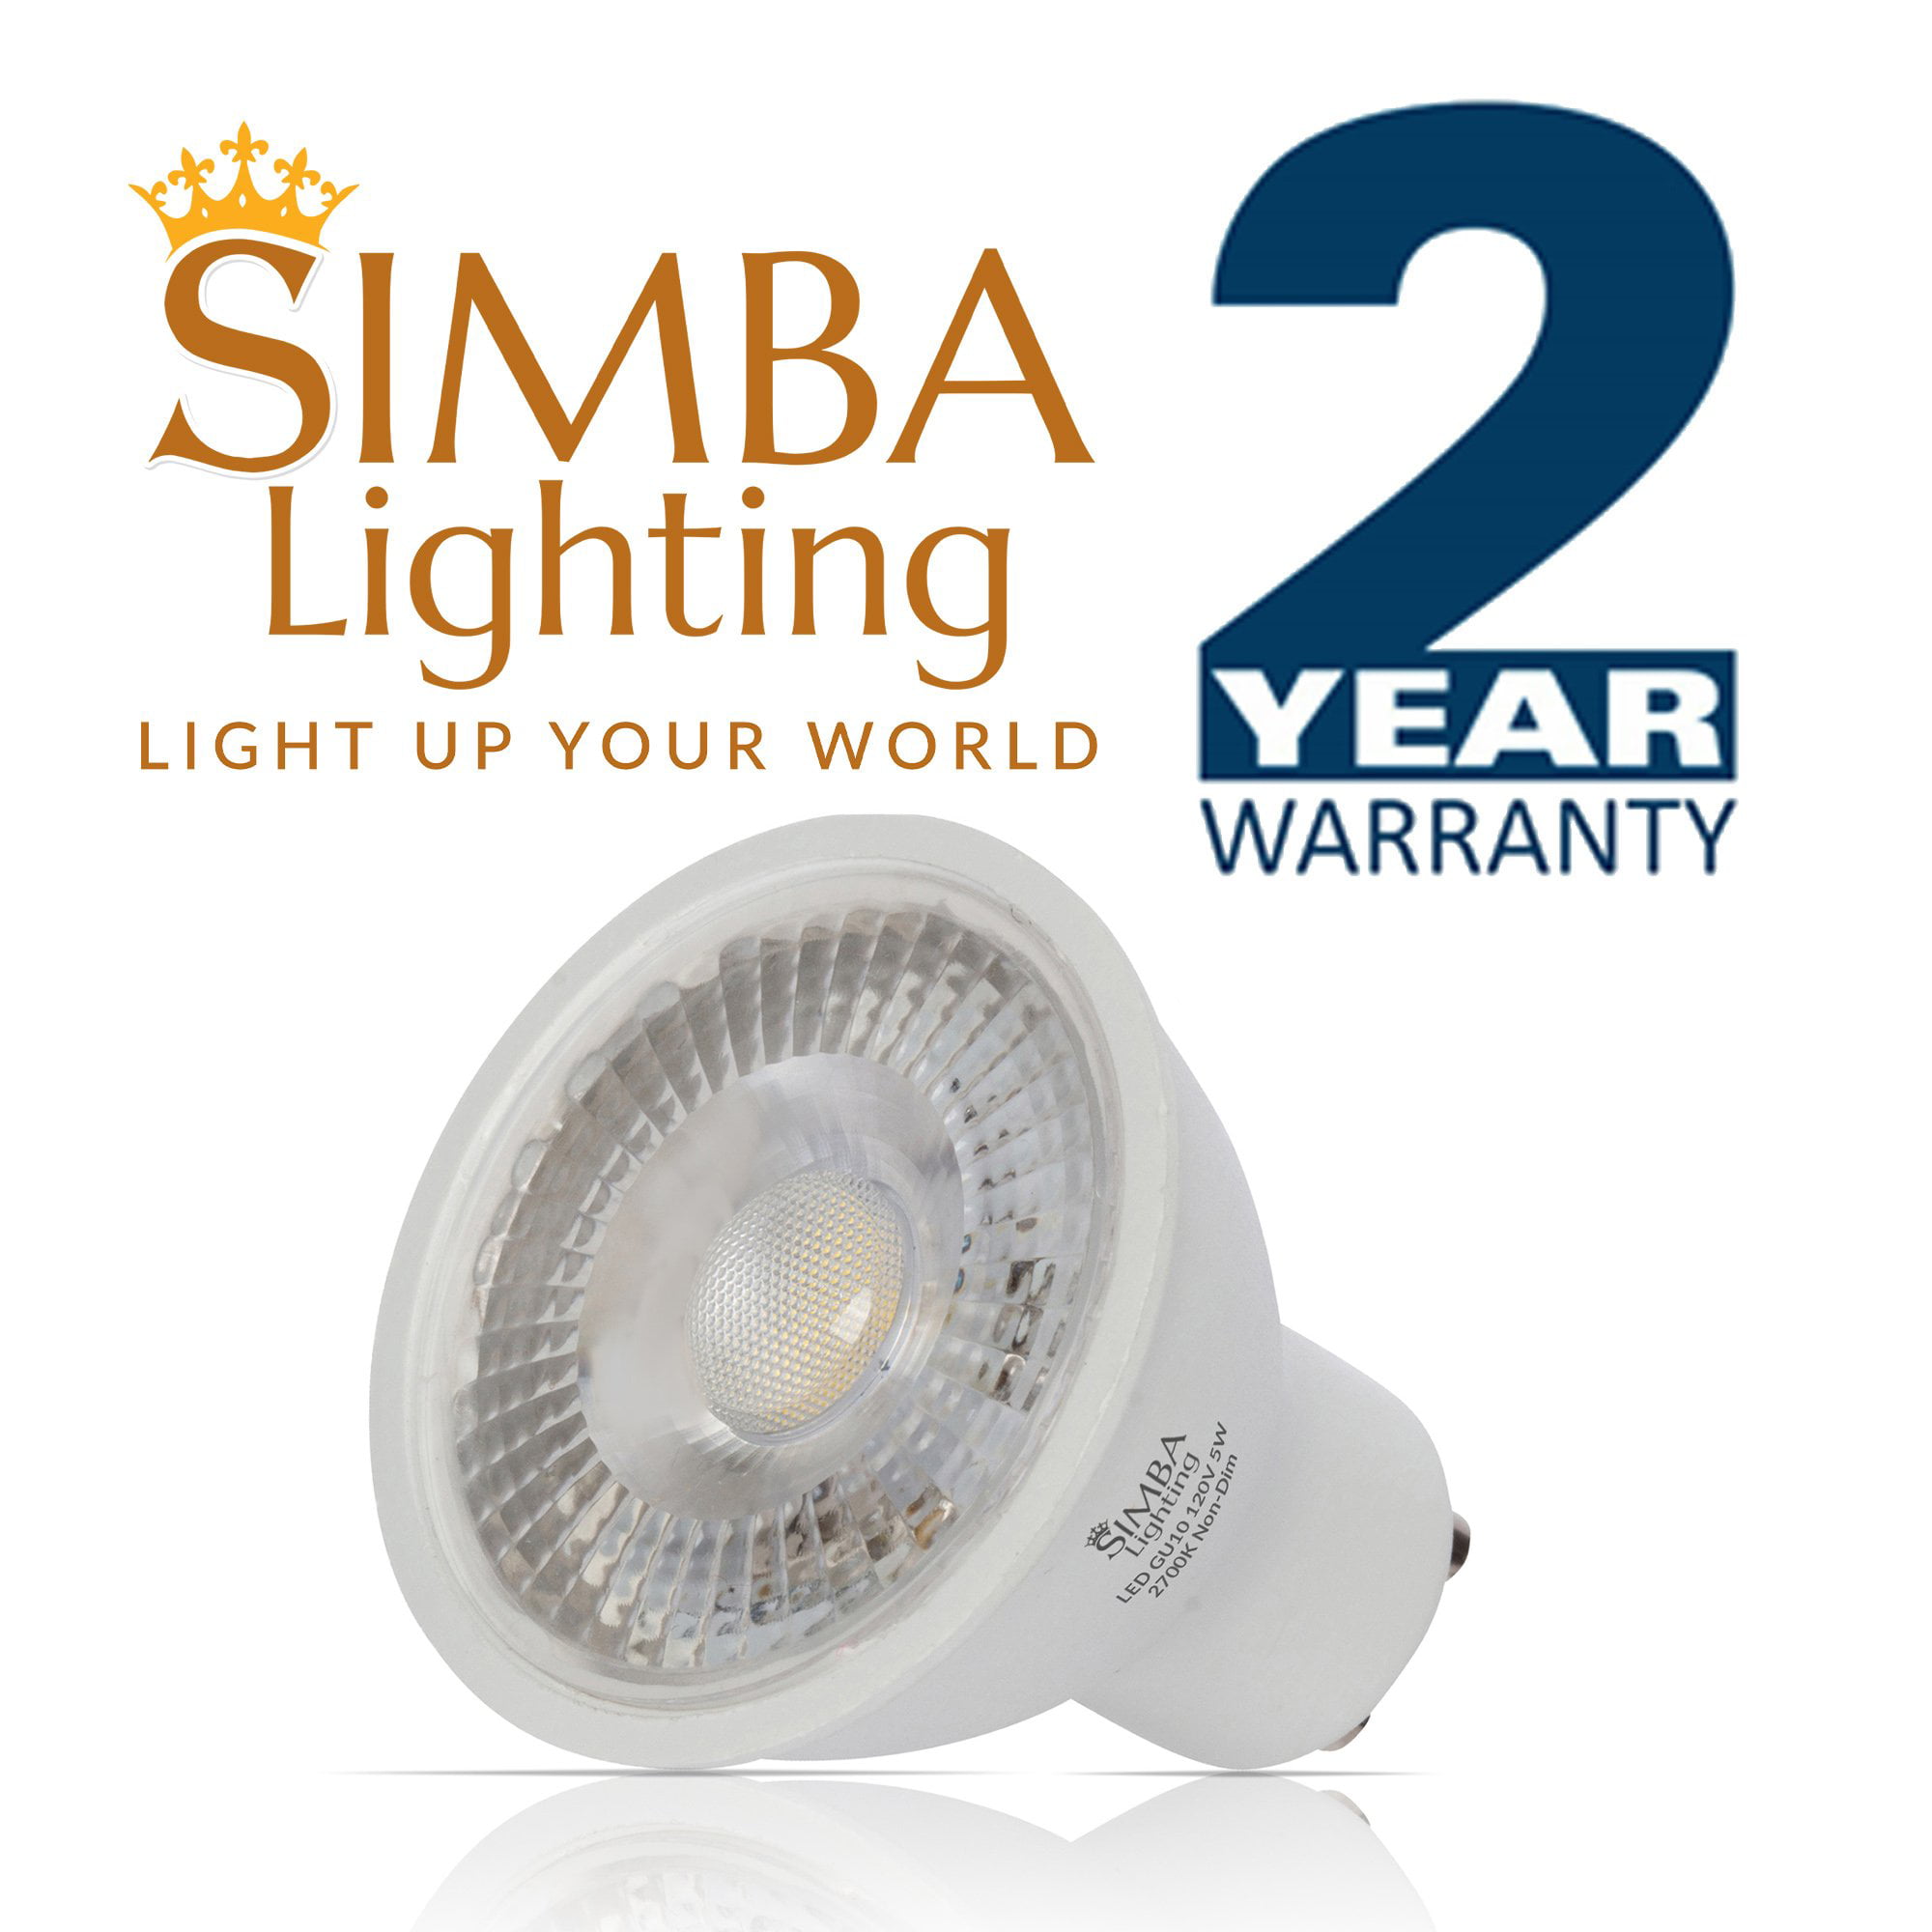 【Fachgeschäft】 Simba Lighting LED Non-Dimmable 2700K Twist 120V 50W 5W Replacement Spot Light Bulb GU10 Base 6-Pack